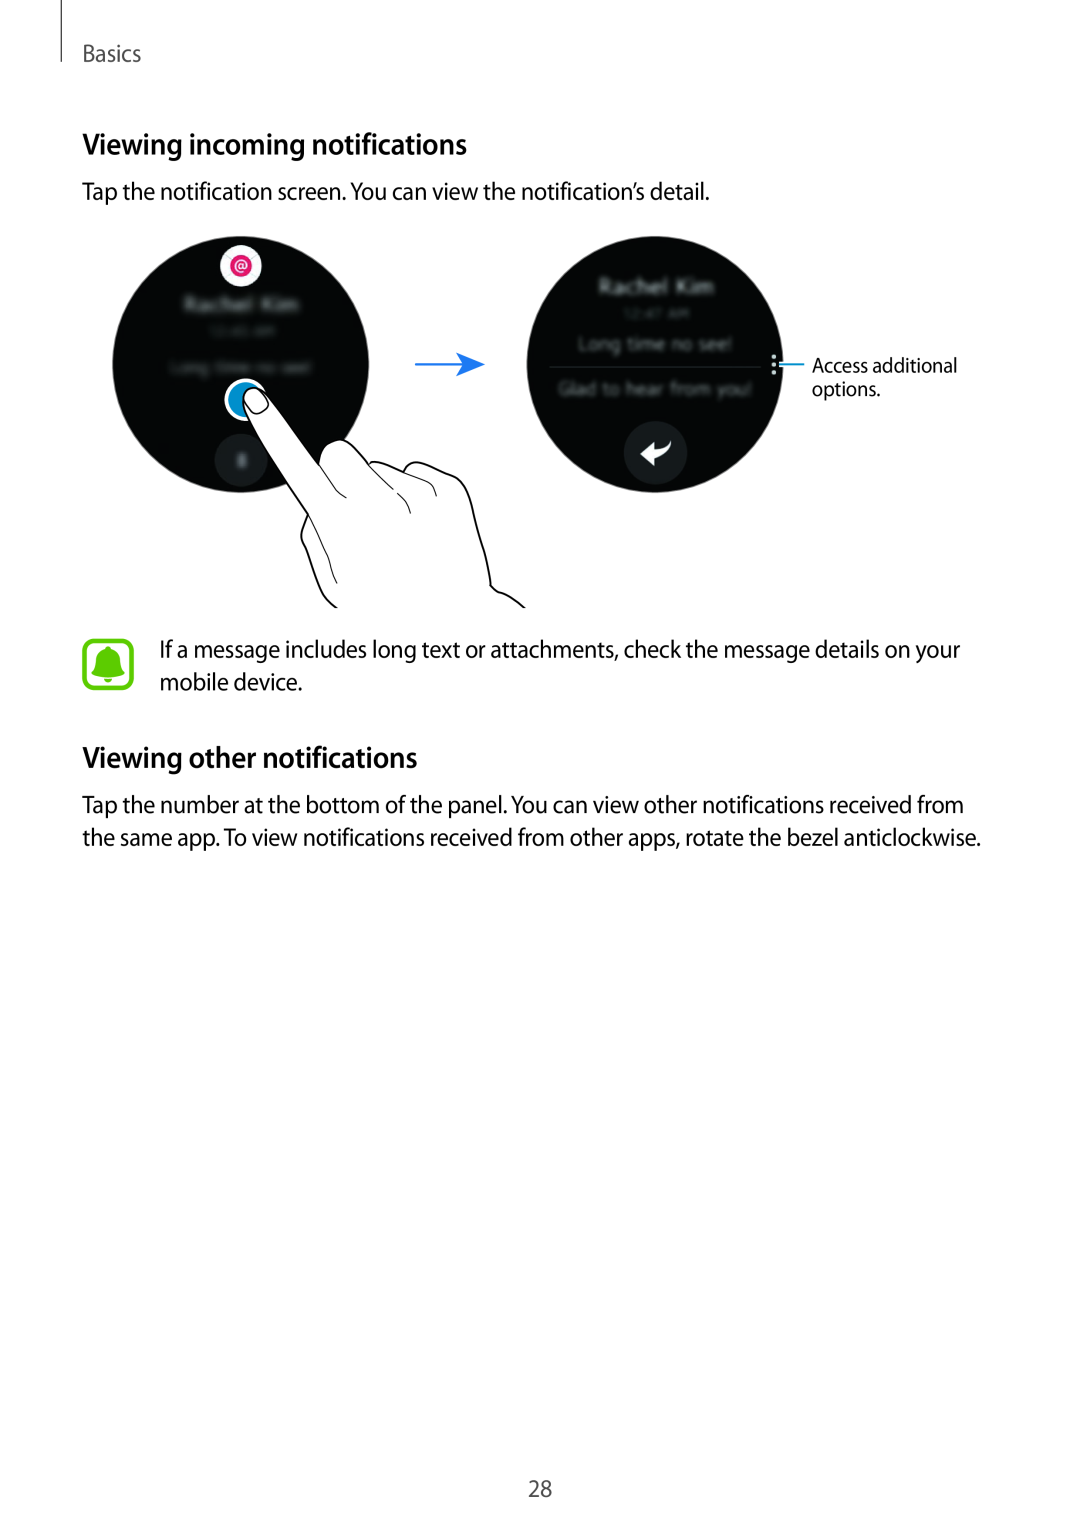 Samsung SM-R7350ZKGTIM Viewing incoming notifications, Viewing other notifications, Basics, Access additional options 